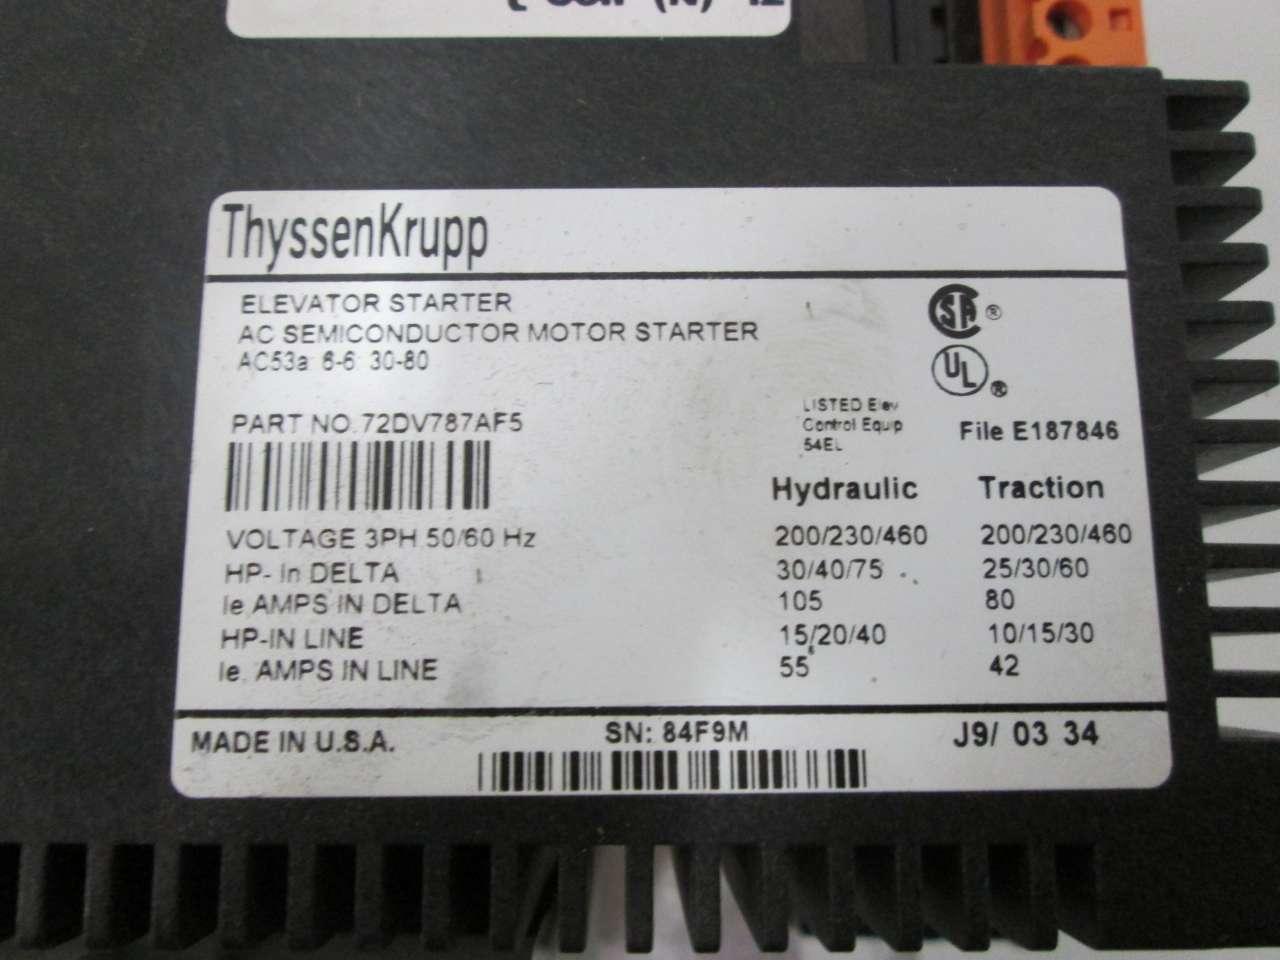 Siemens Furnas 72DV787AF5 Thyssen Krupp Softstart Motor Elevator Starter 480V 